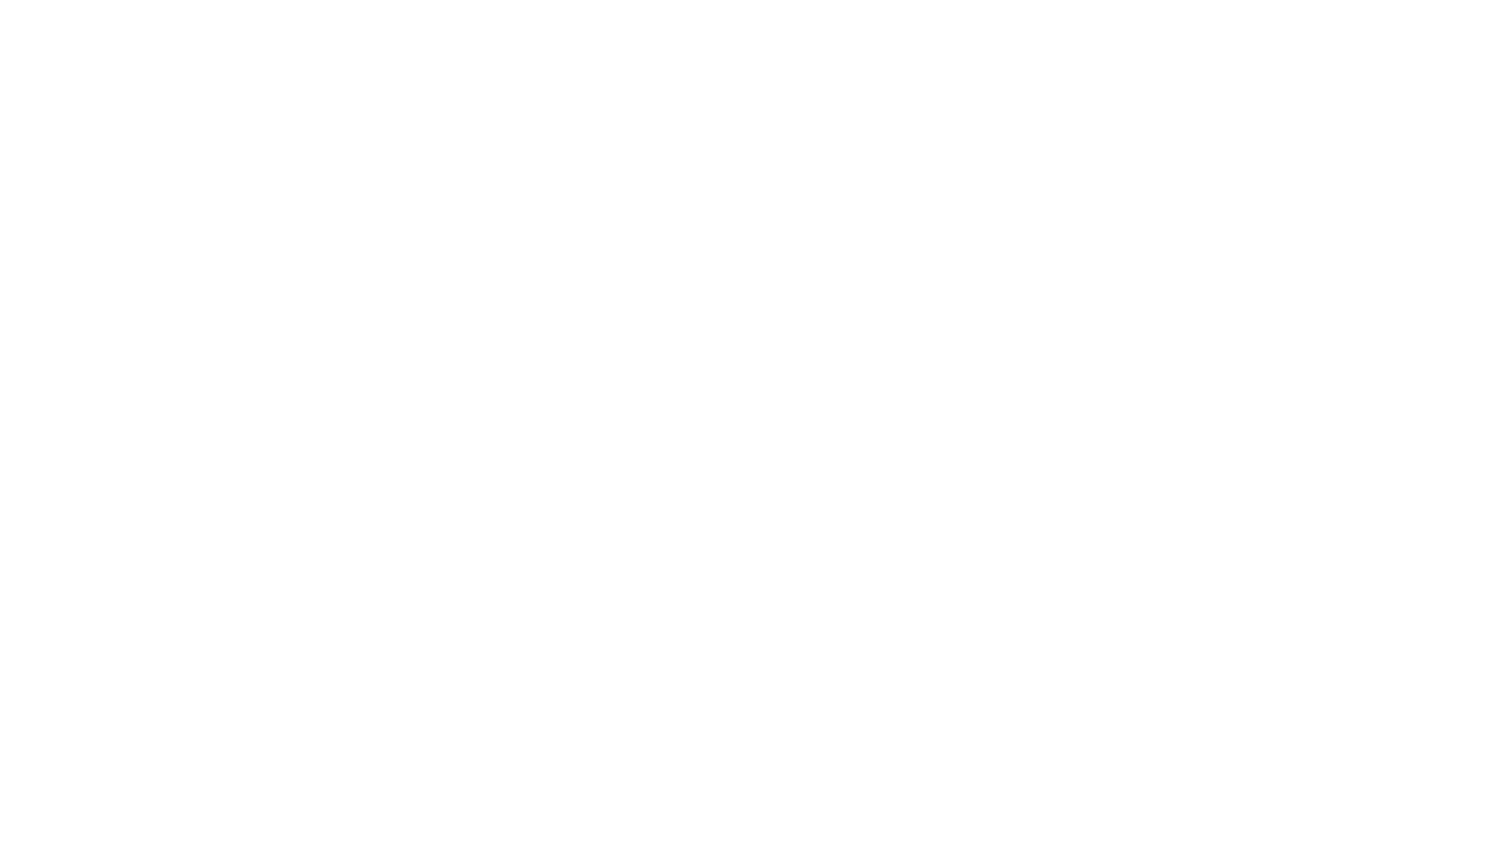 violinmusic4all